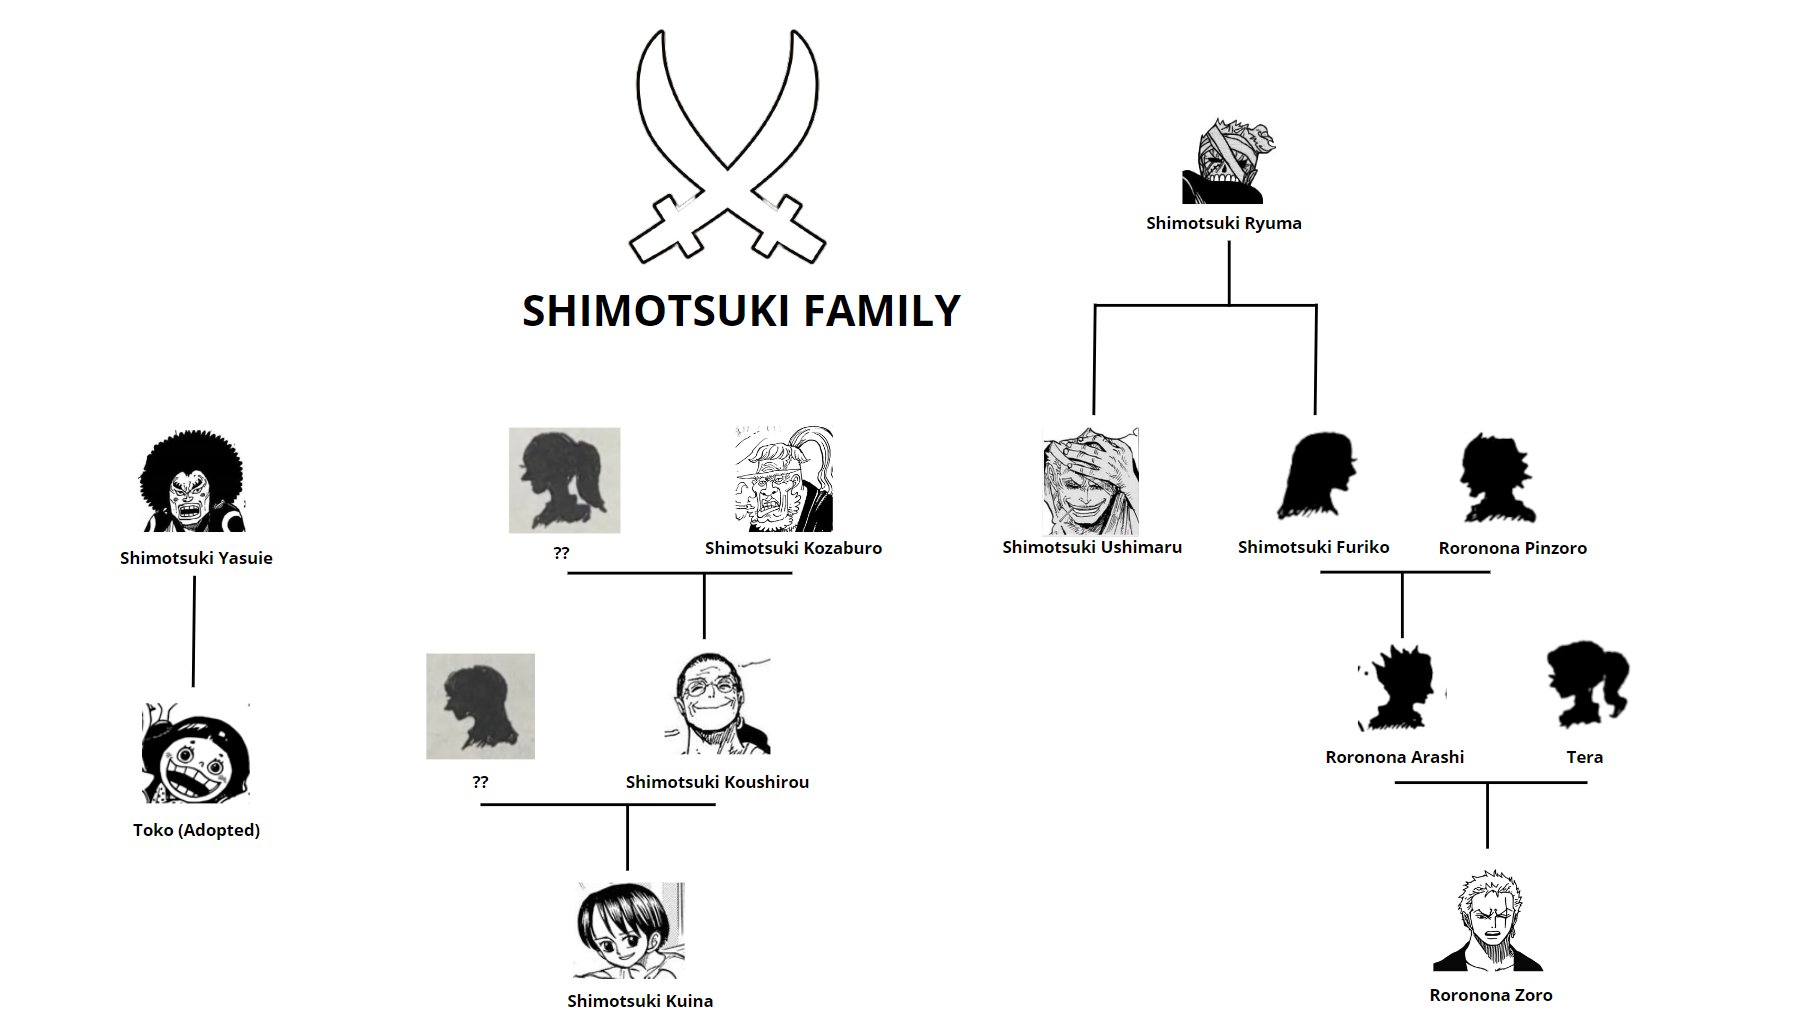 SHIMOTSUKI FAMILY TREE